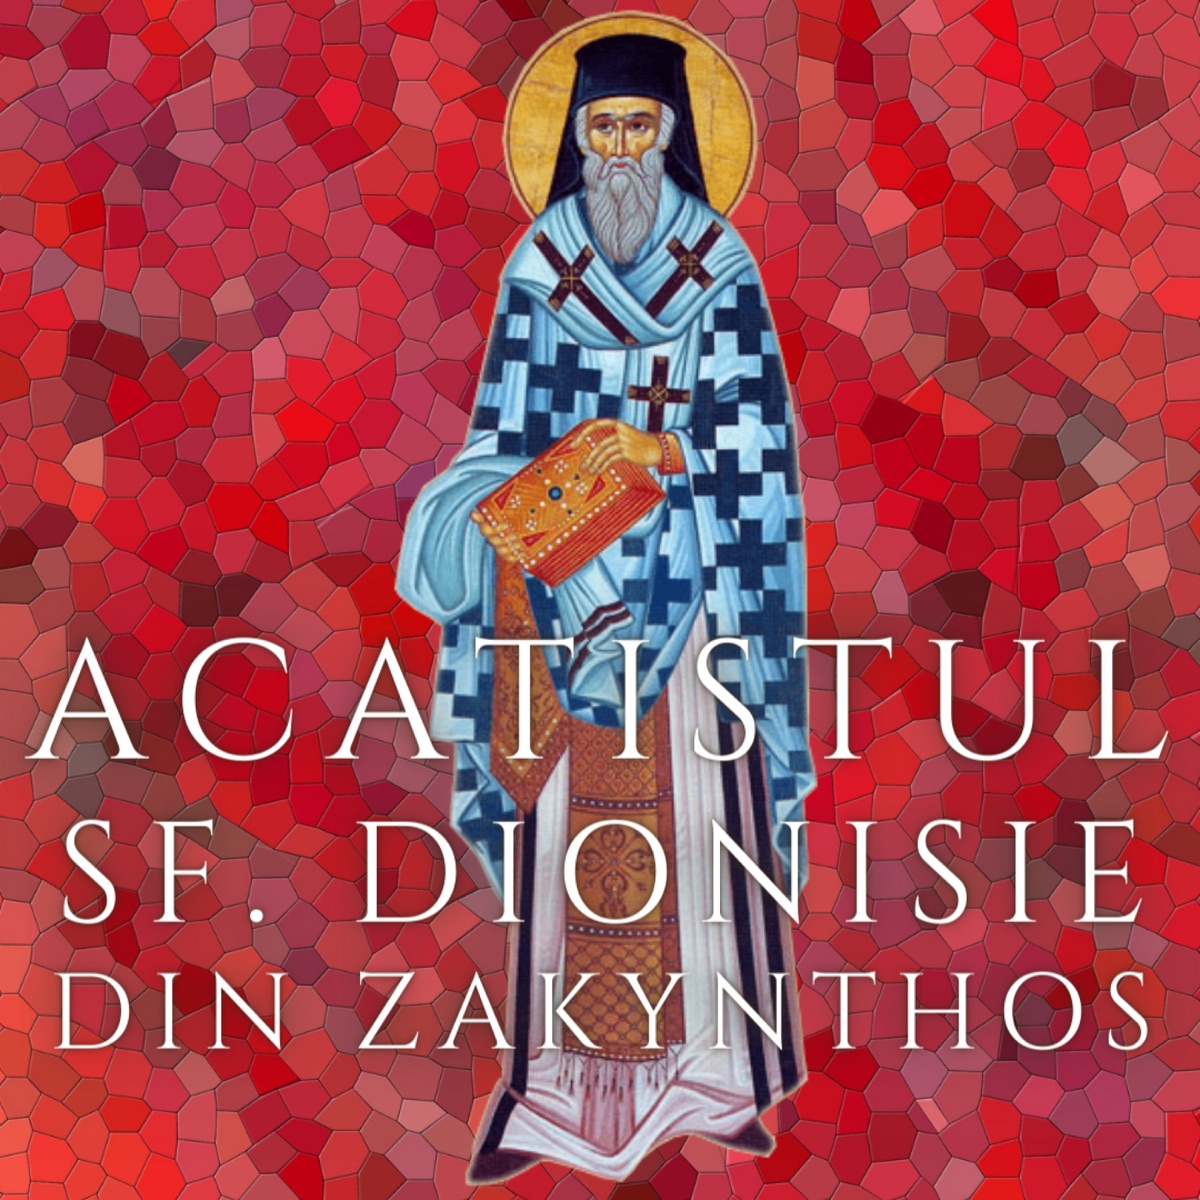 Acatistul Sfantului Pantelimon by Vlad Rosu on Apple Music